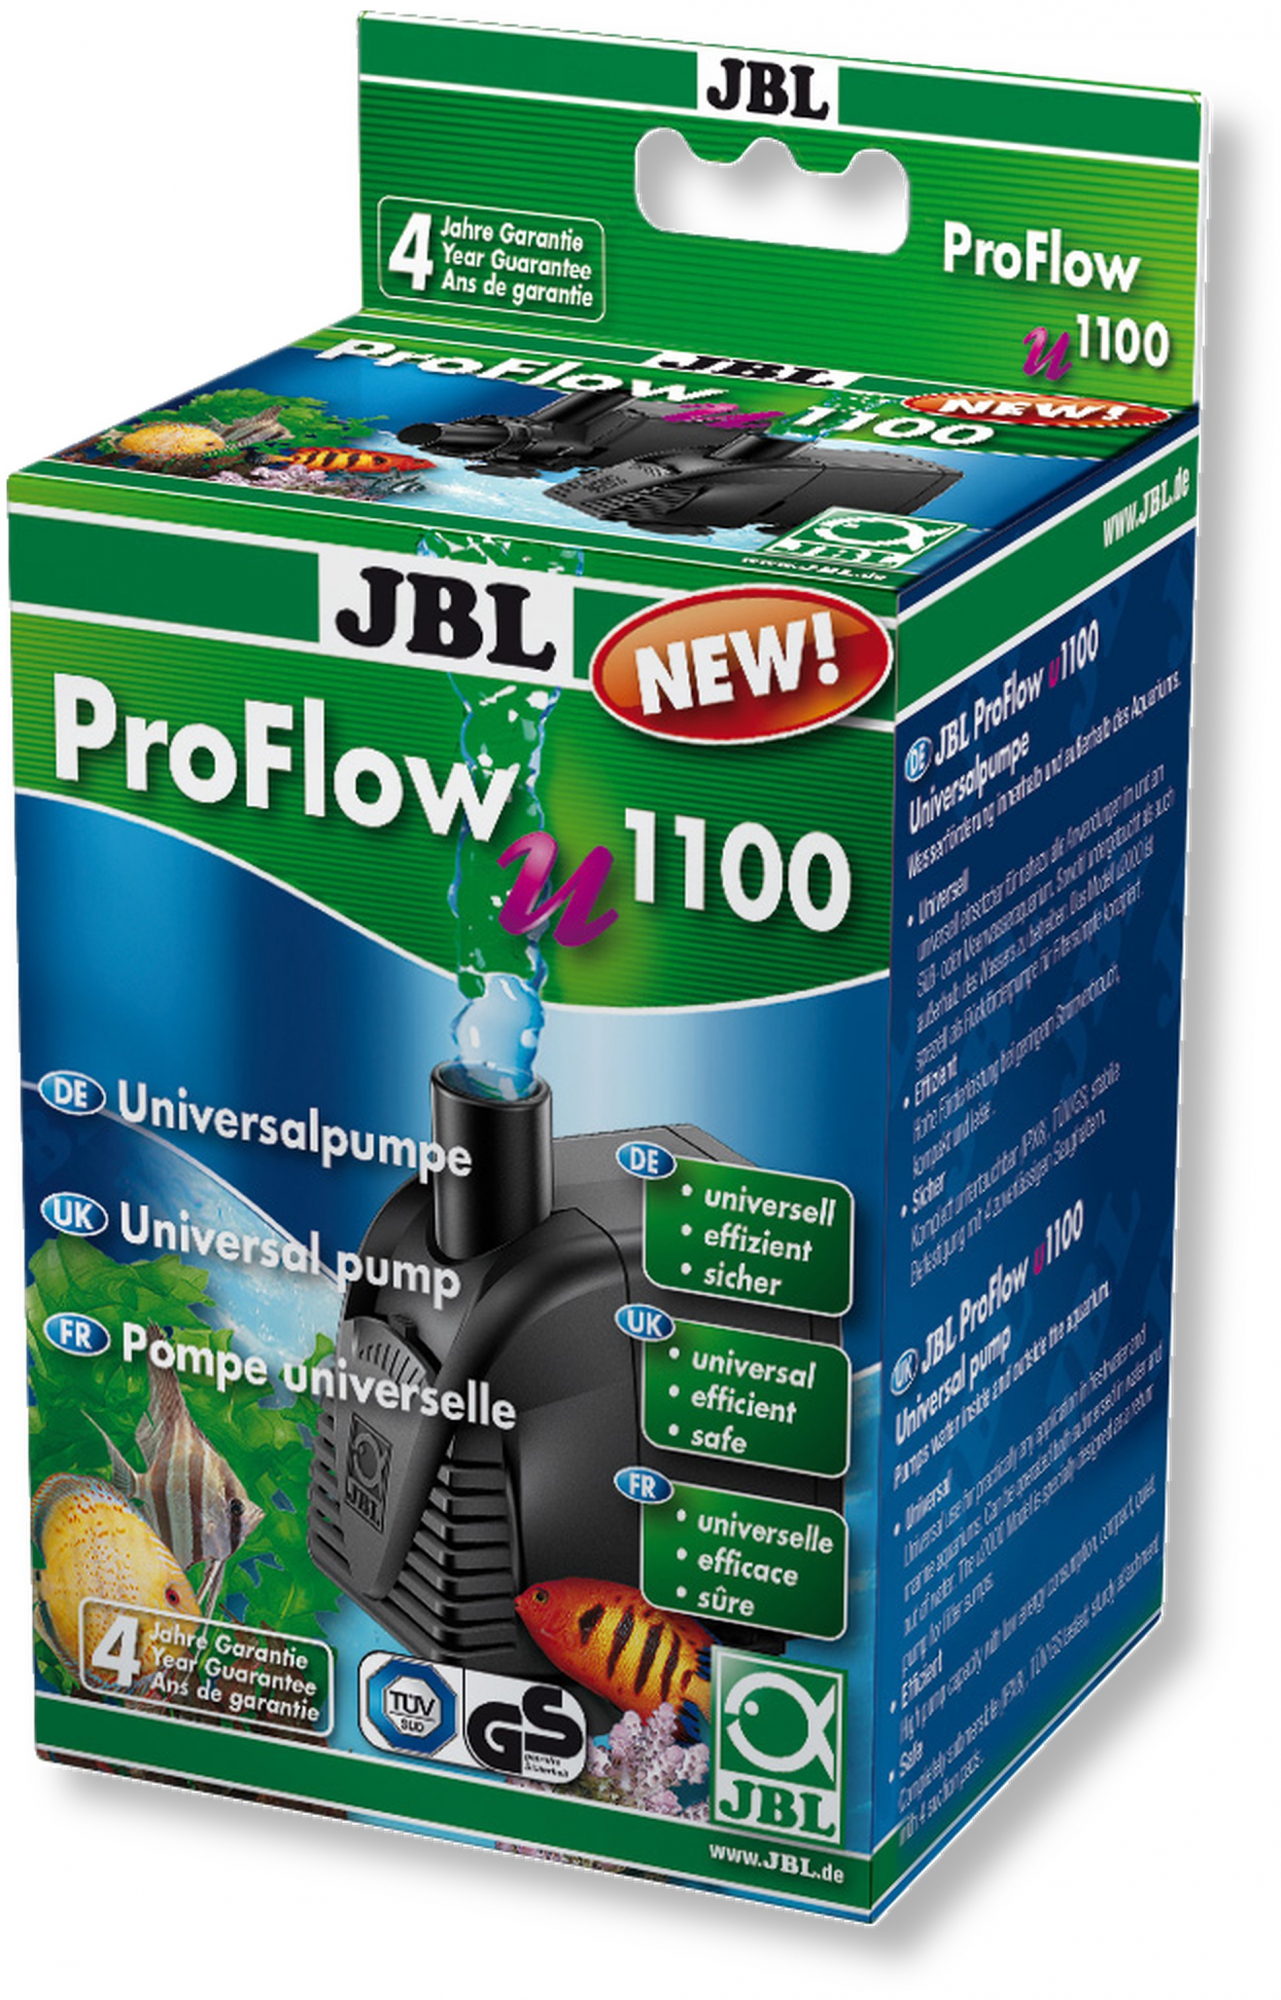 JBL Proflow, Universalpumpe - mehrere Modelle verfügbar